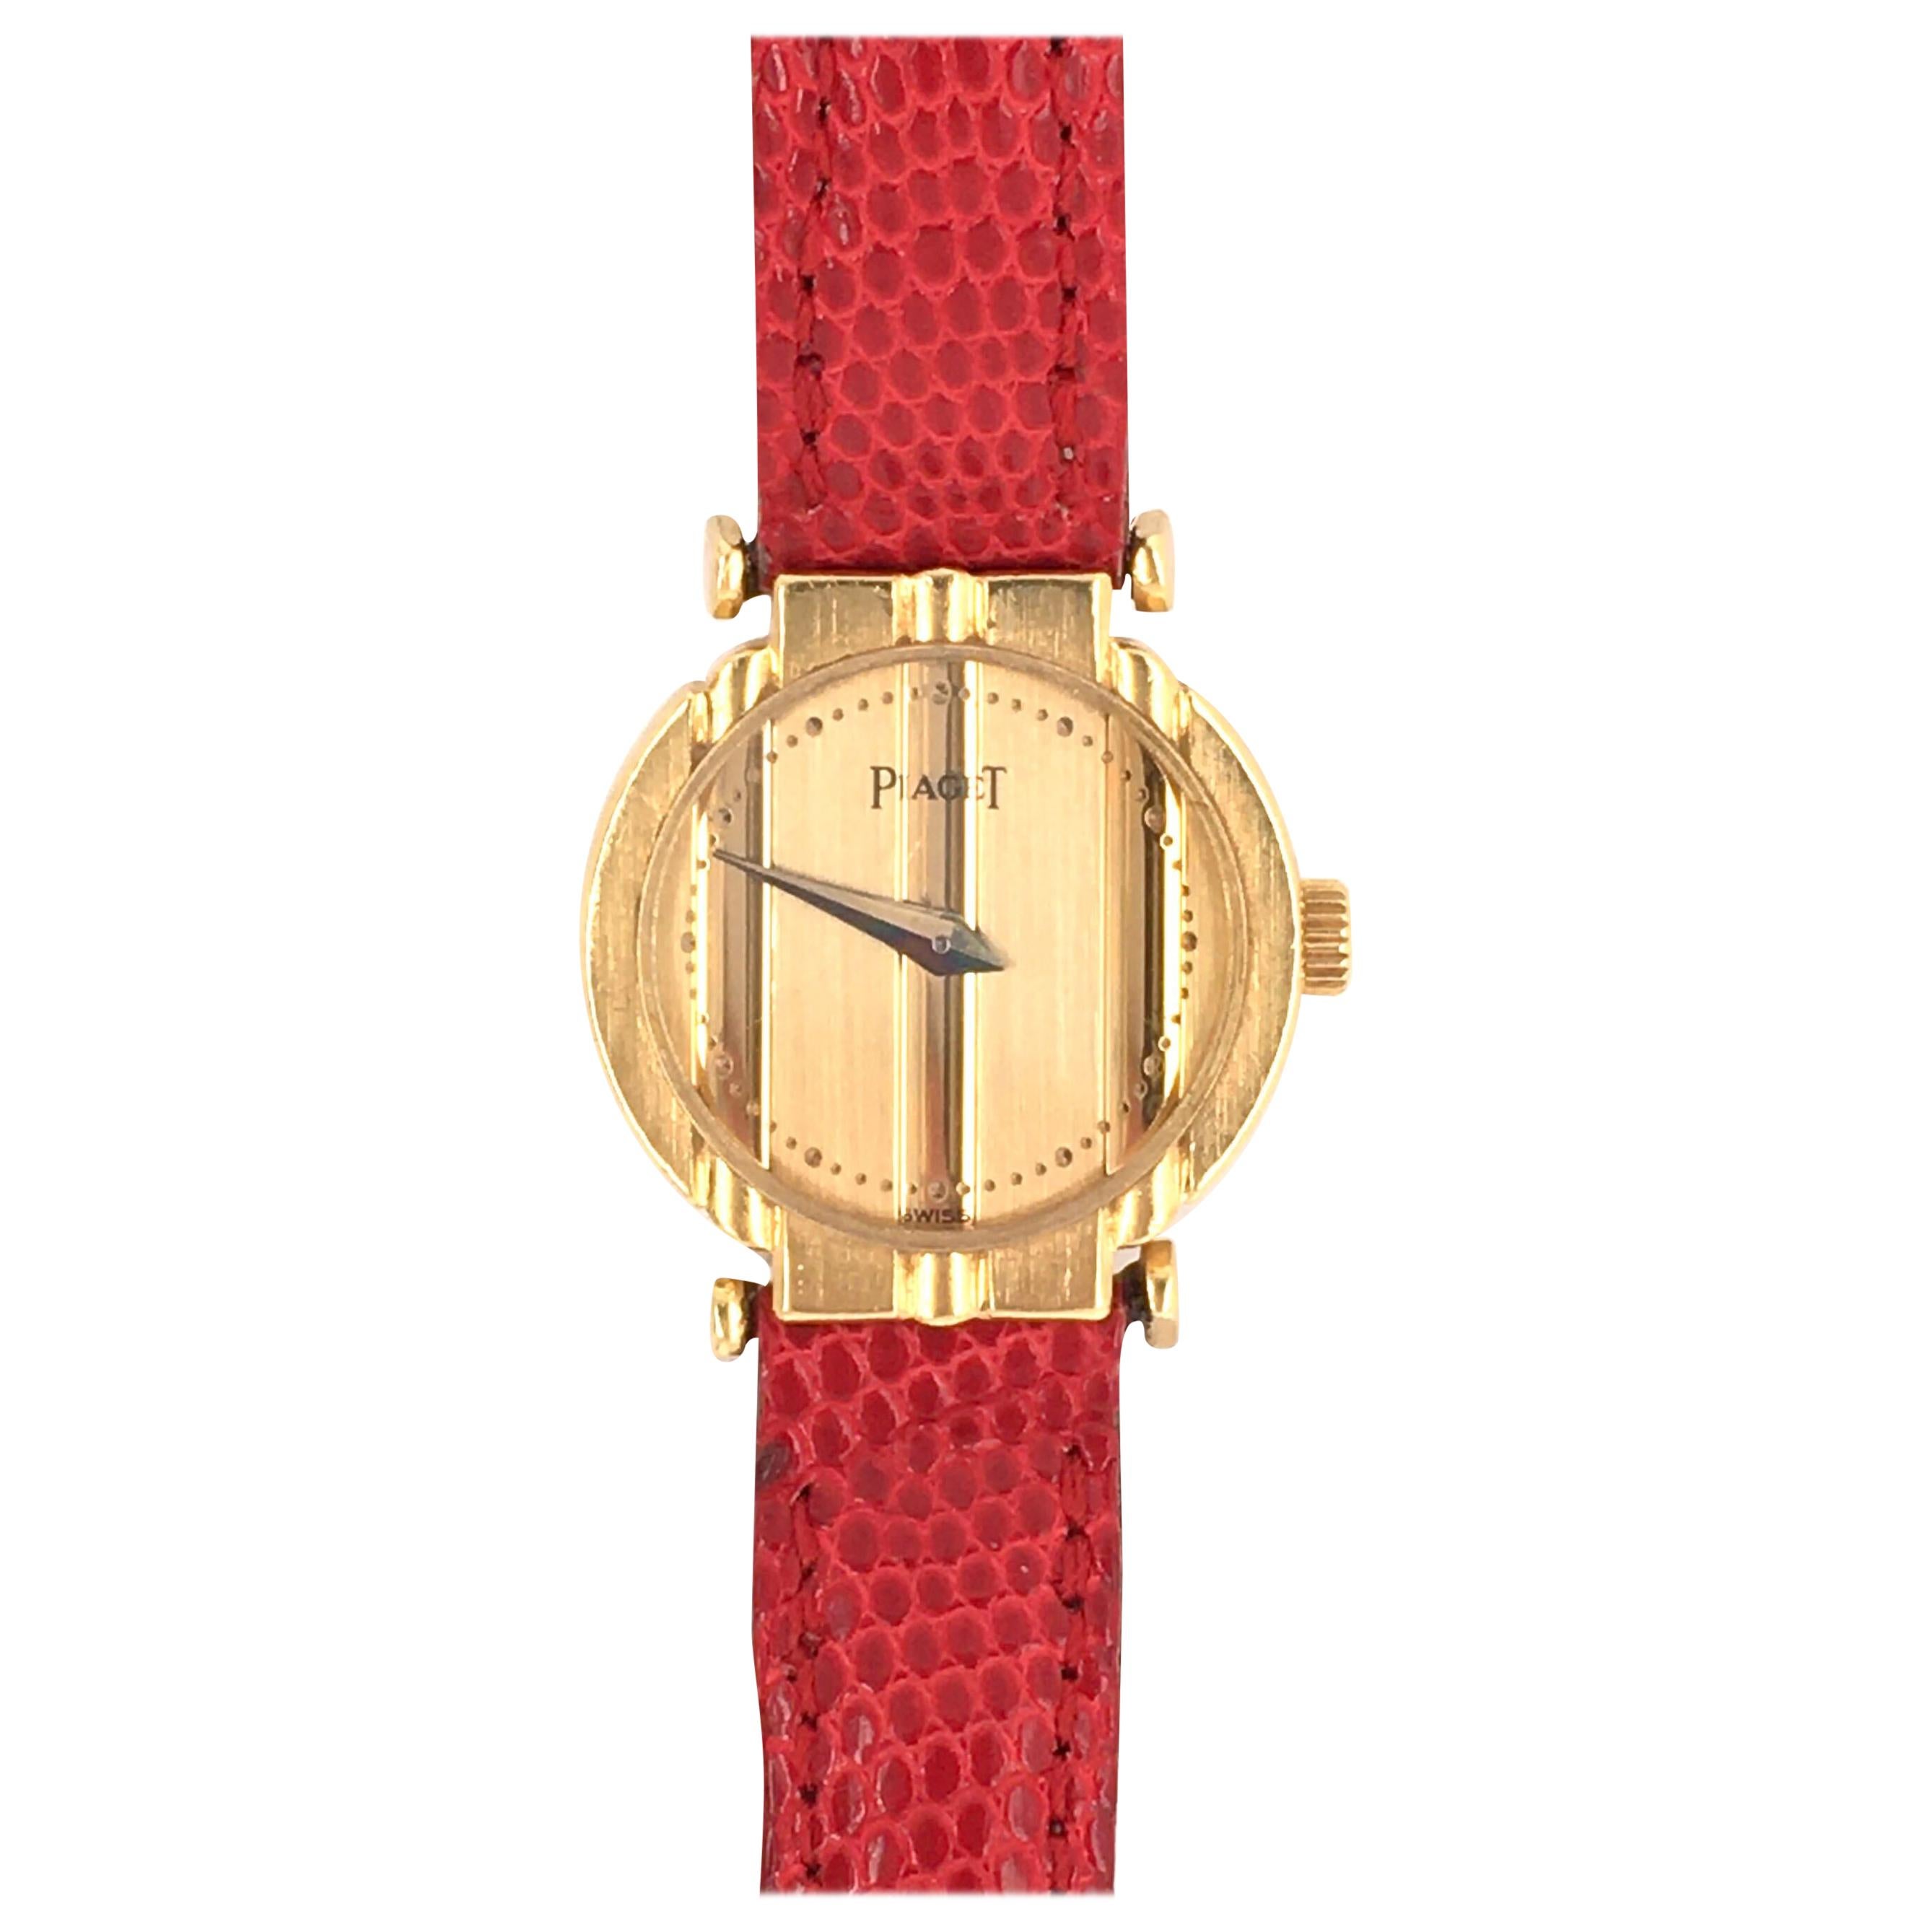 Piaget Gold Polo Wristwatch